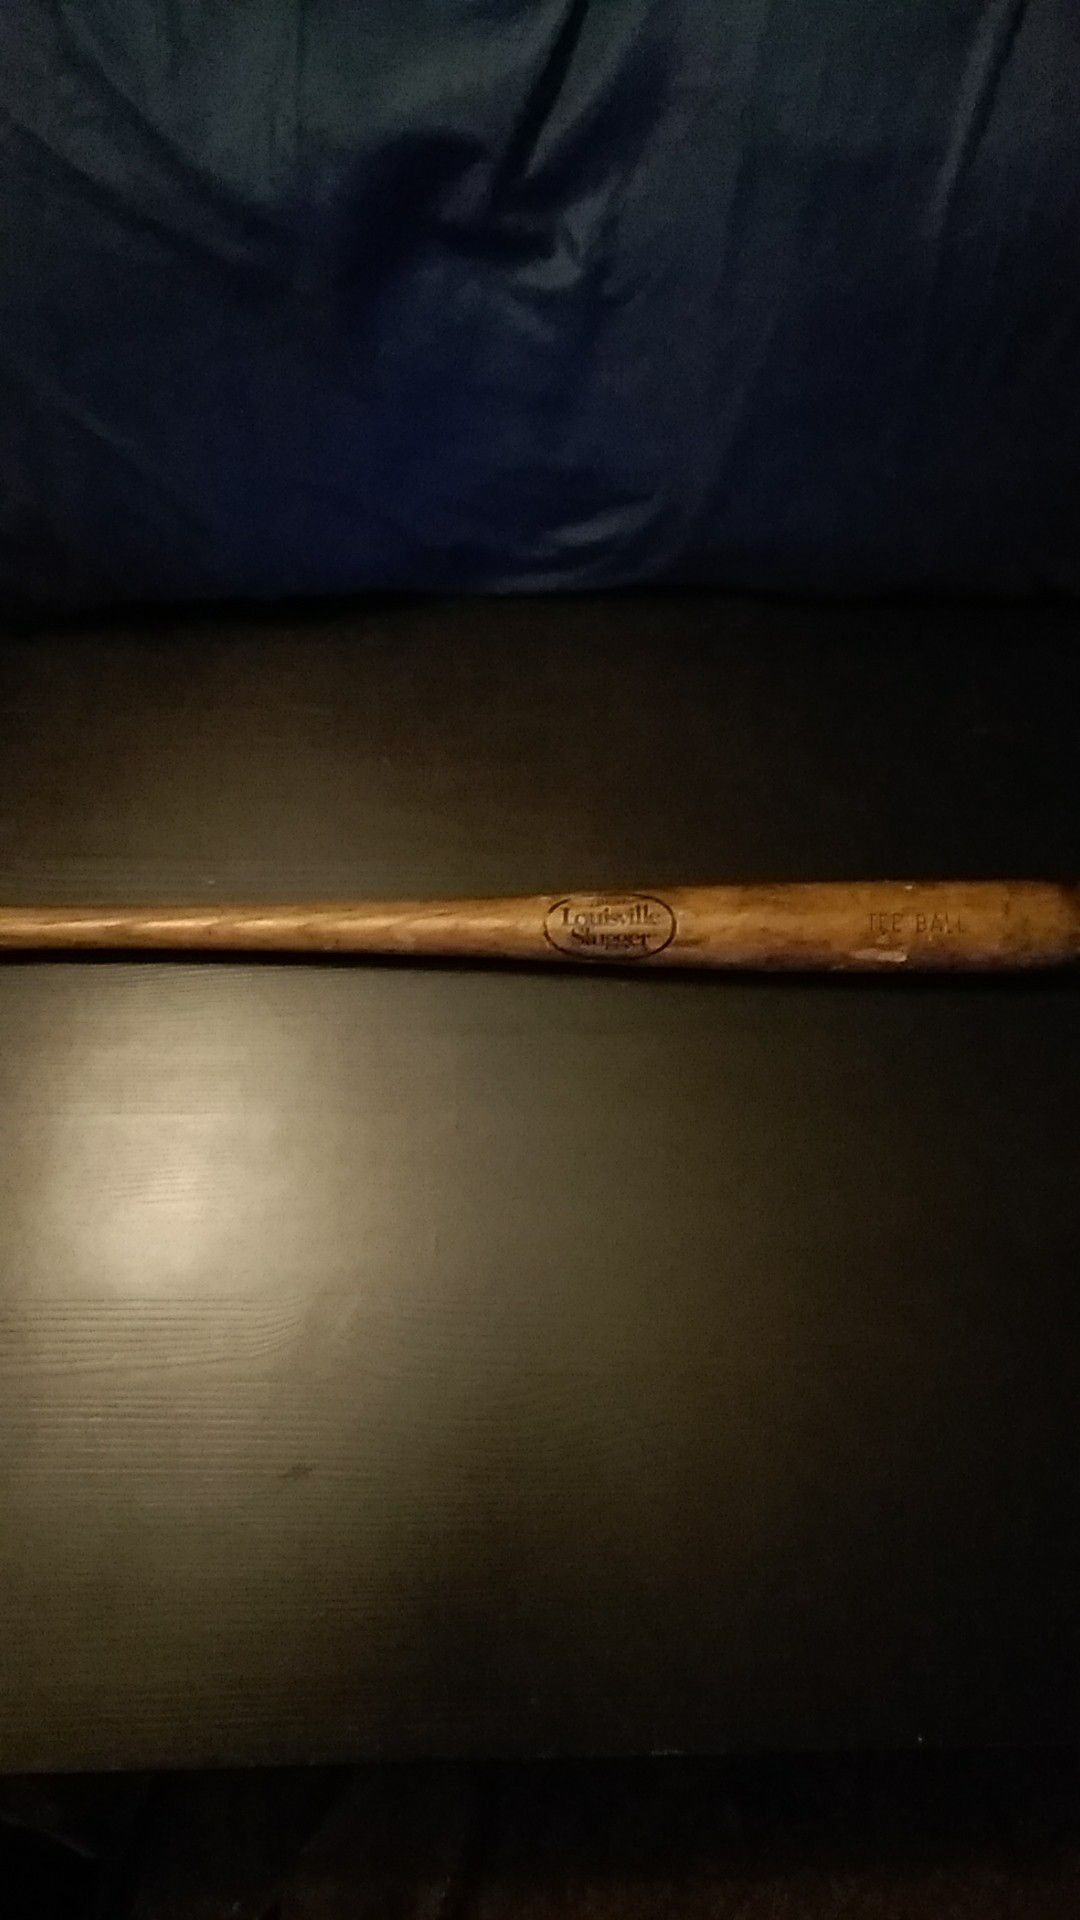 Vintage tee ball baseball bat Louisville Slugger TB-597